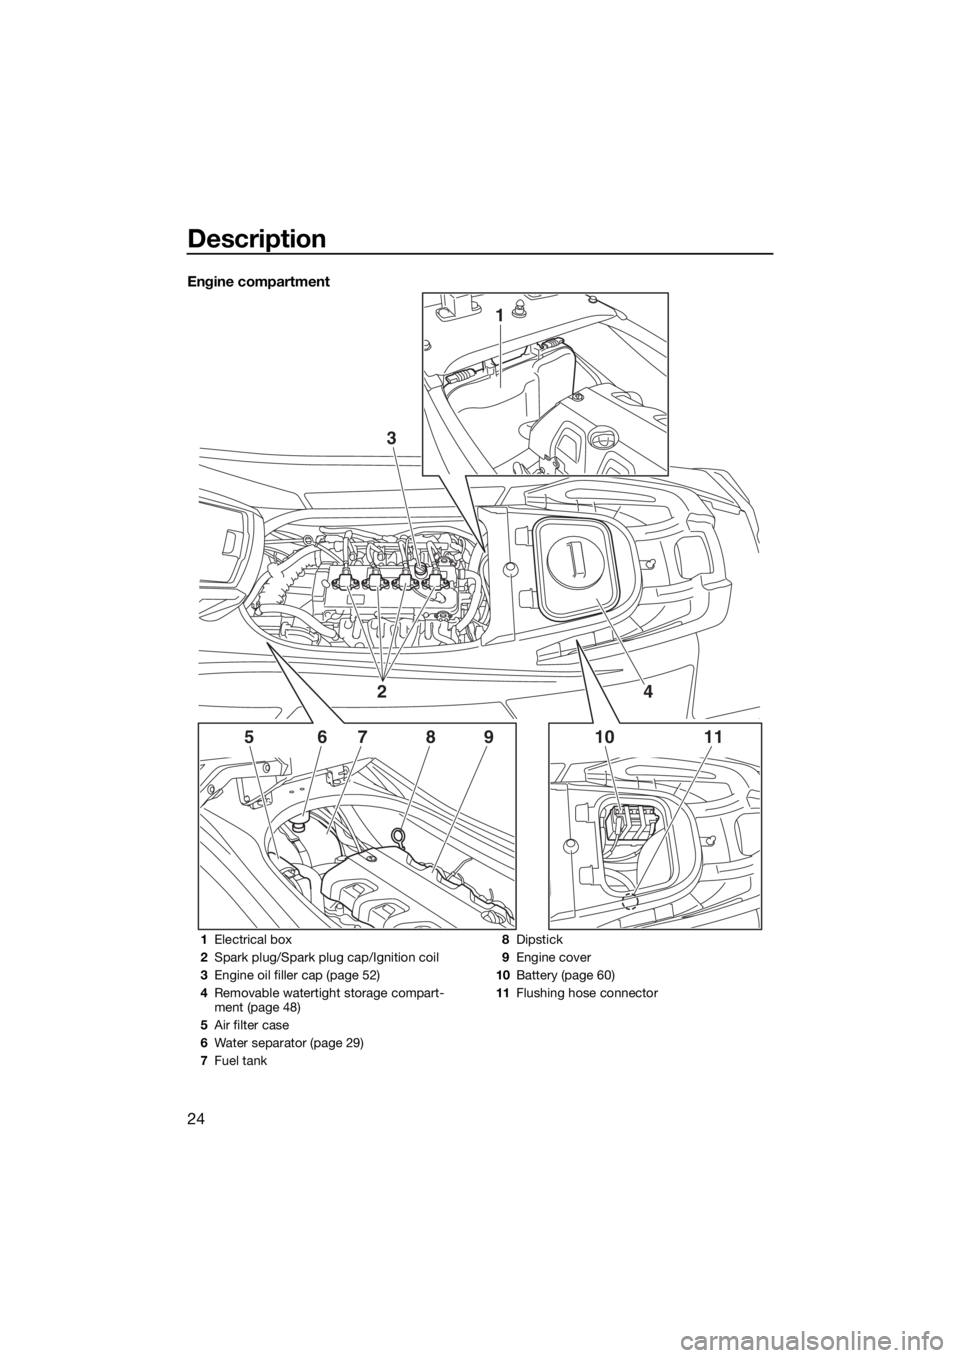 YAMAHA VXR 2015  Owners Manual Description
24
Engine compartment
1
3
561011789
24
1Electrical box
2Spark plug/Spark plug cap/Ignition coil
3Engine oil filler cap (page 52)
4Removable watertight storage compart-
ment (page 48)
5Air 